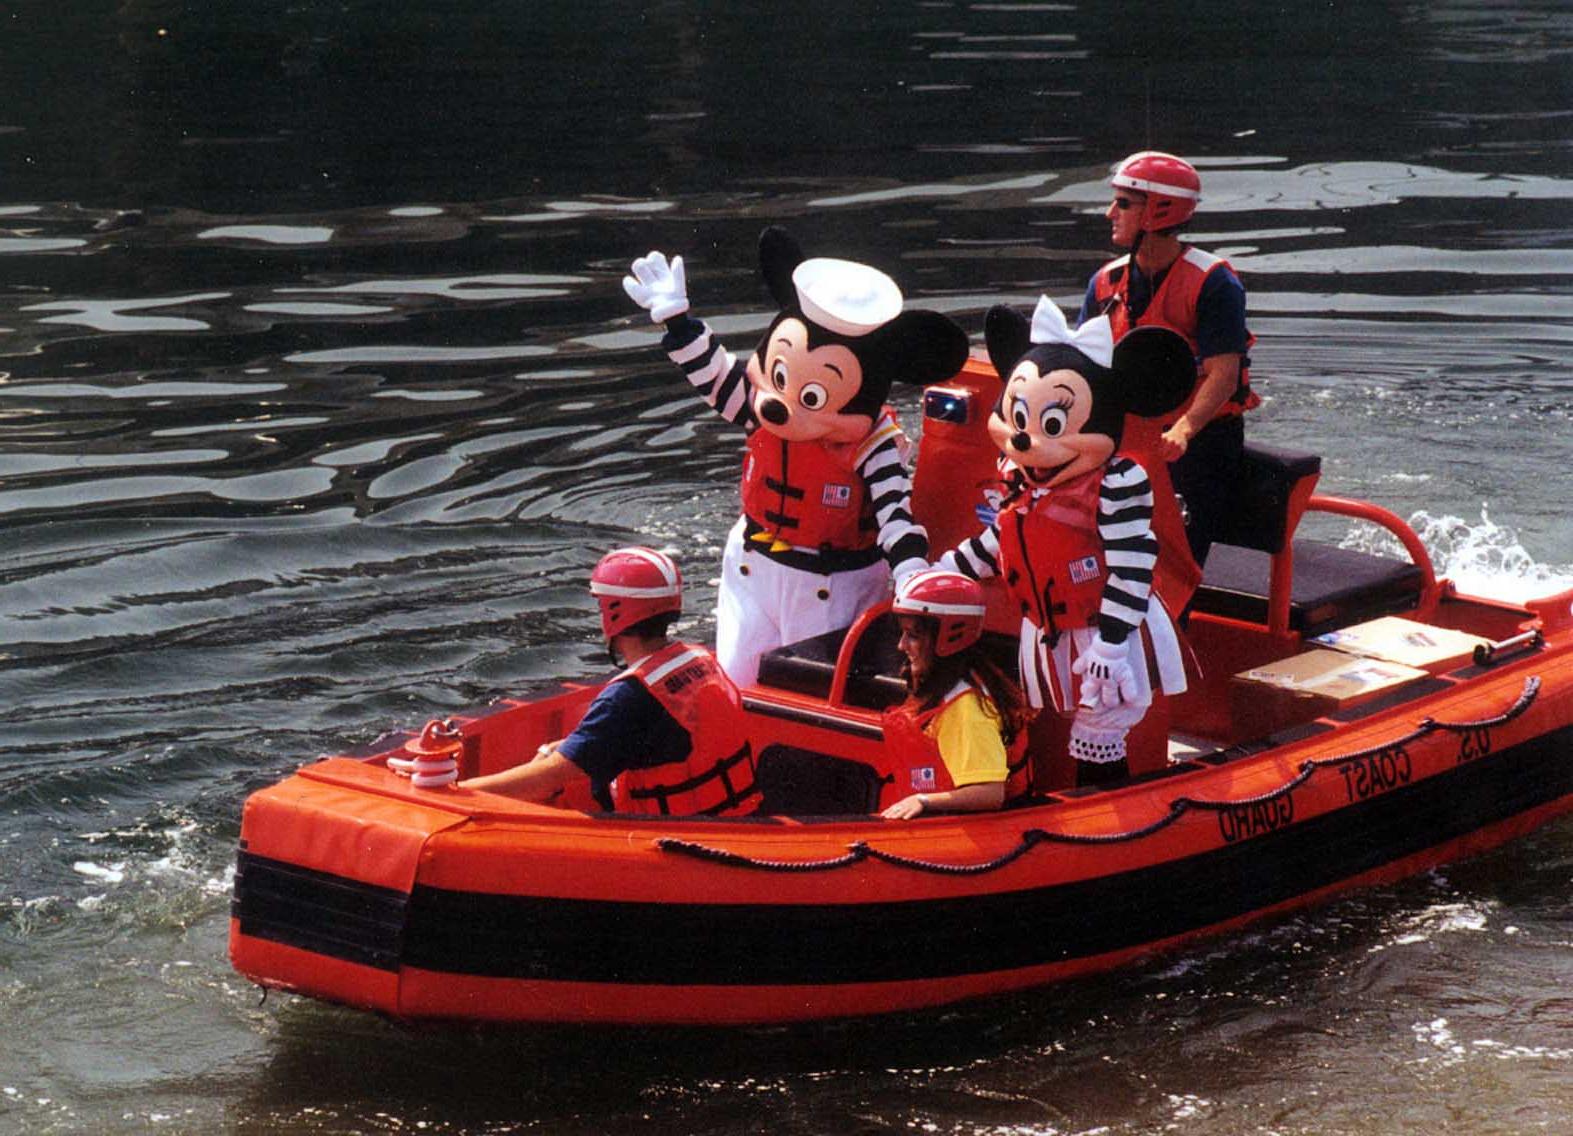  July 2 --Mickey and Minnie